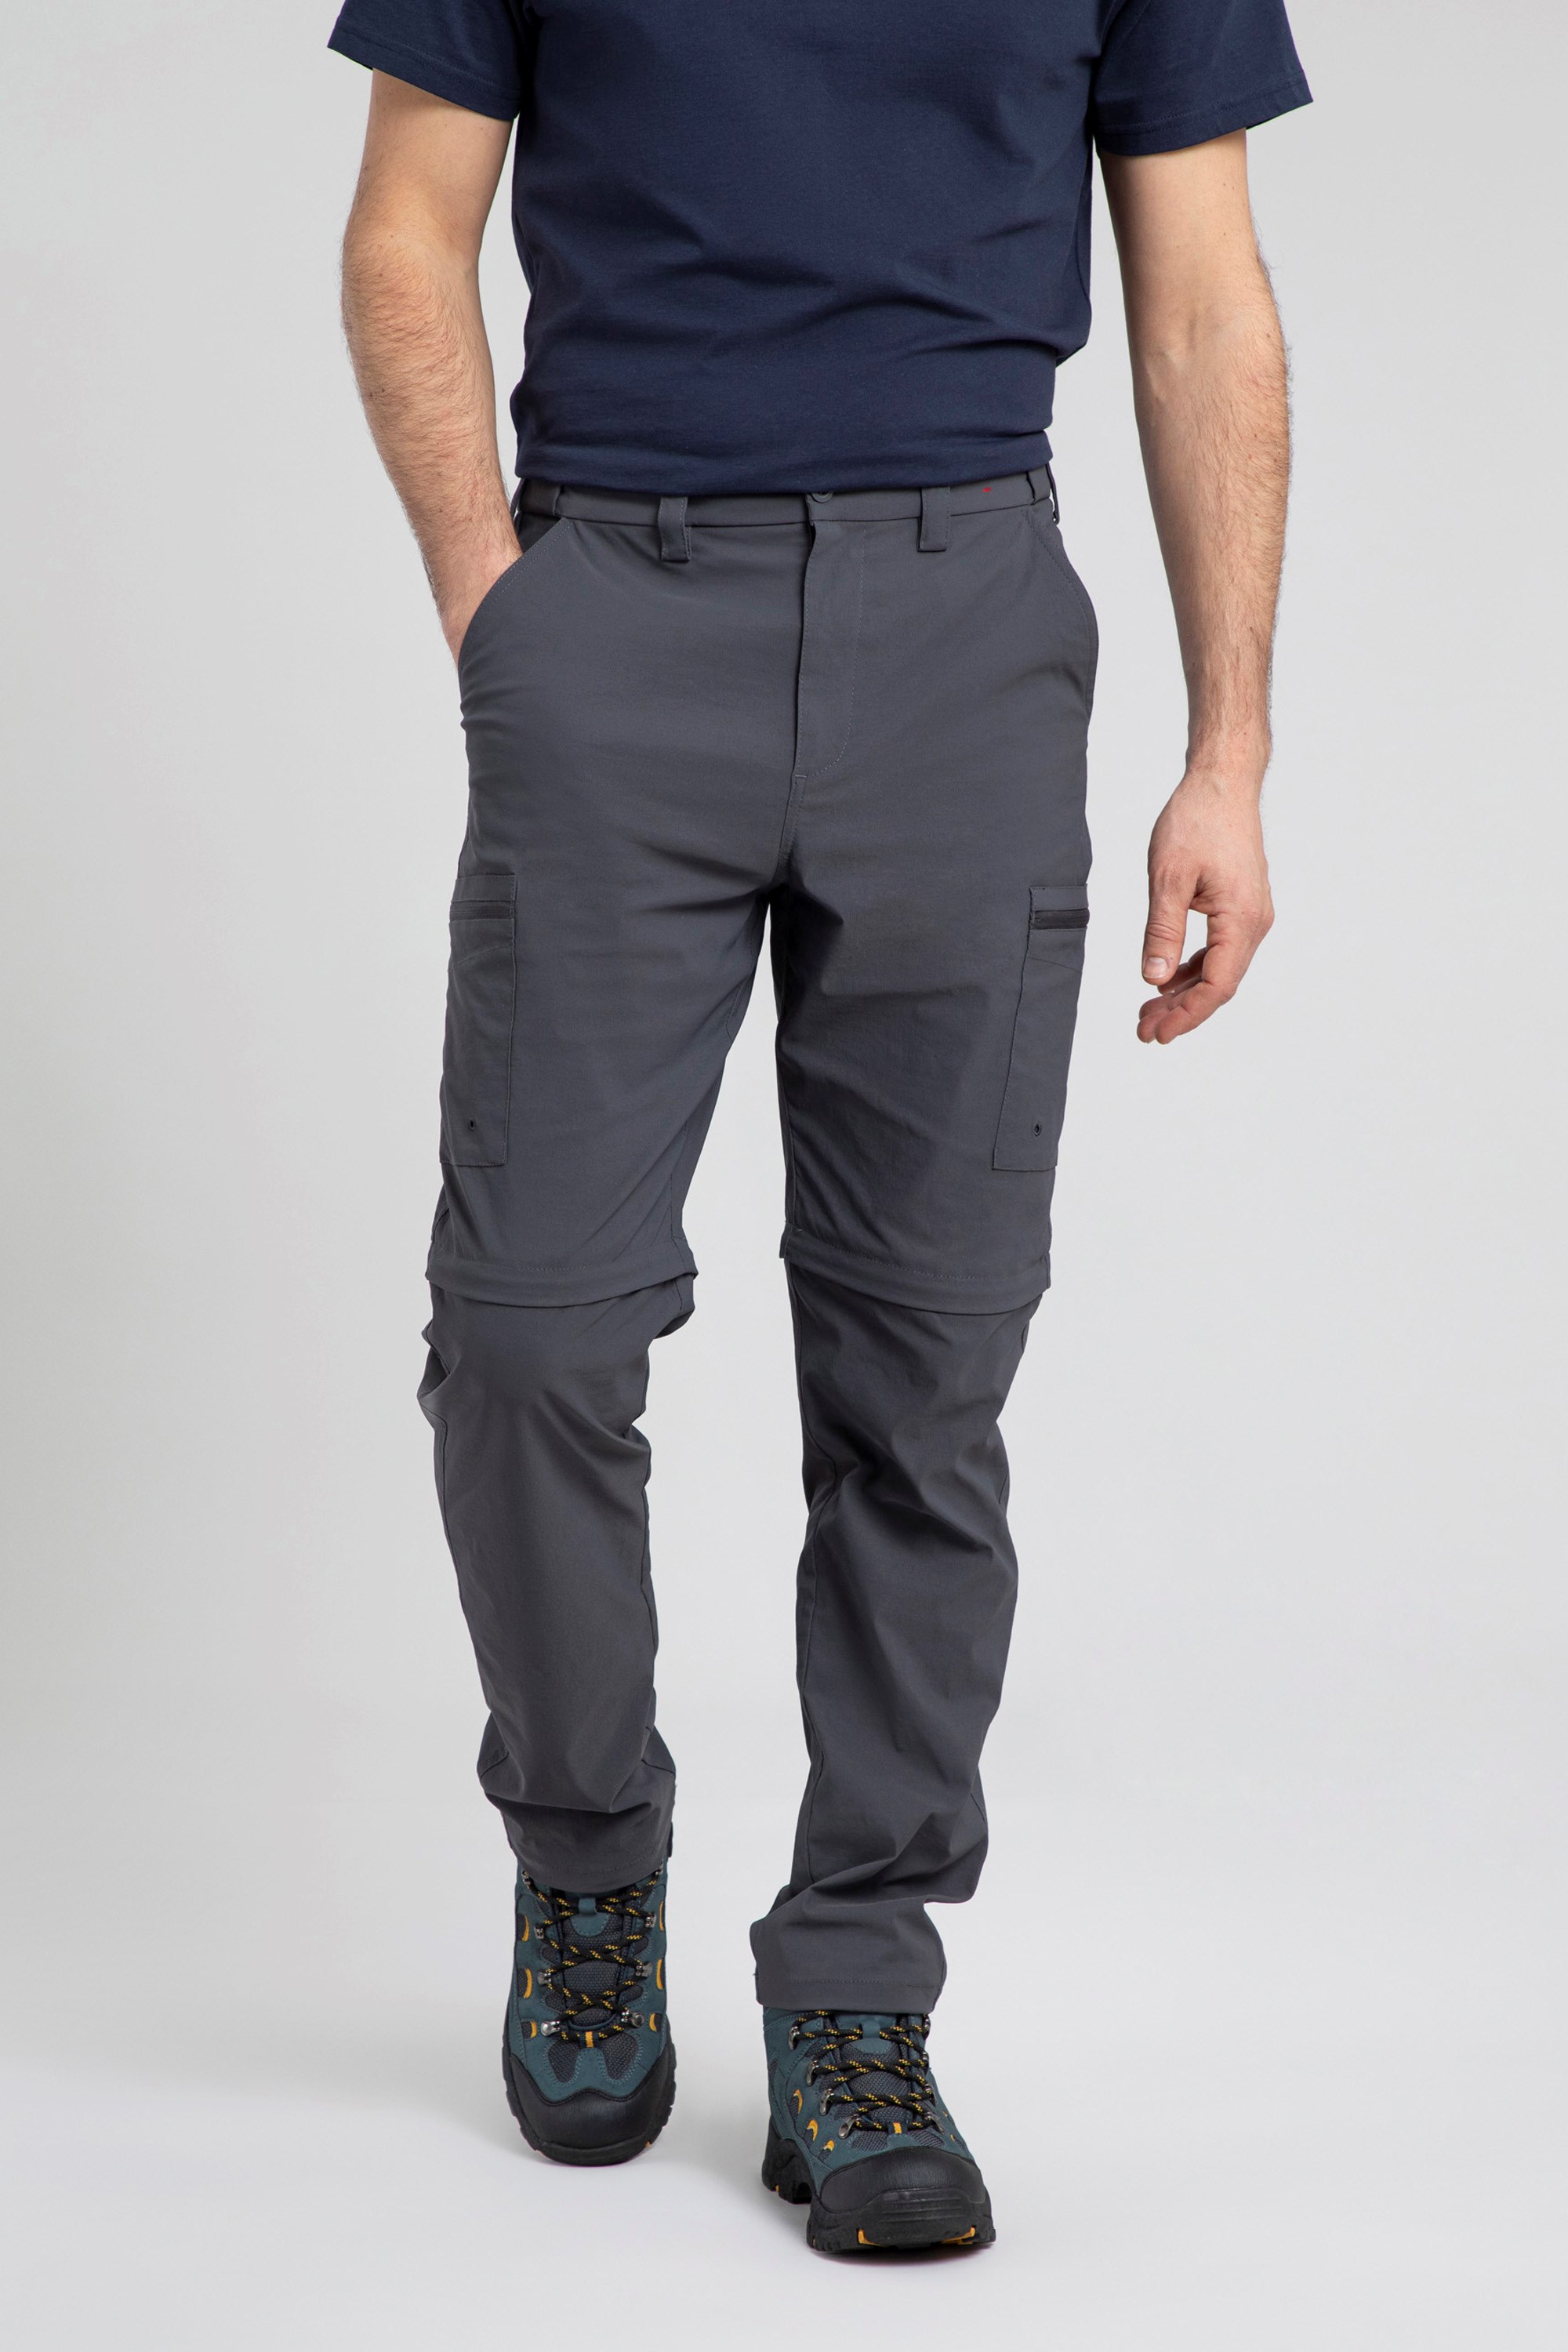 Mountain Warehouse Mens Trek Trouser Male Convertible Stretch Hiking Trousers 